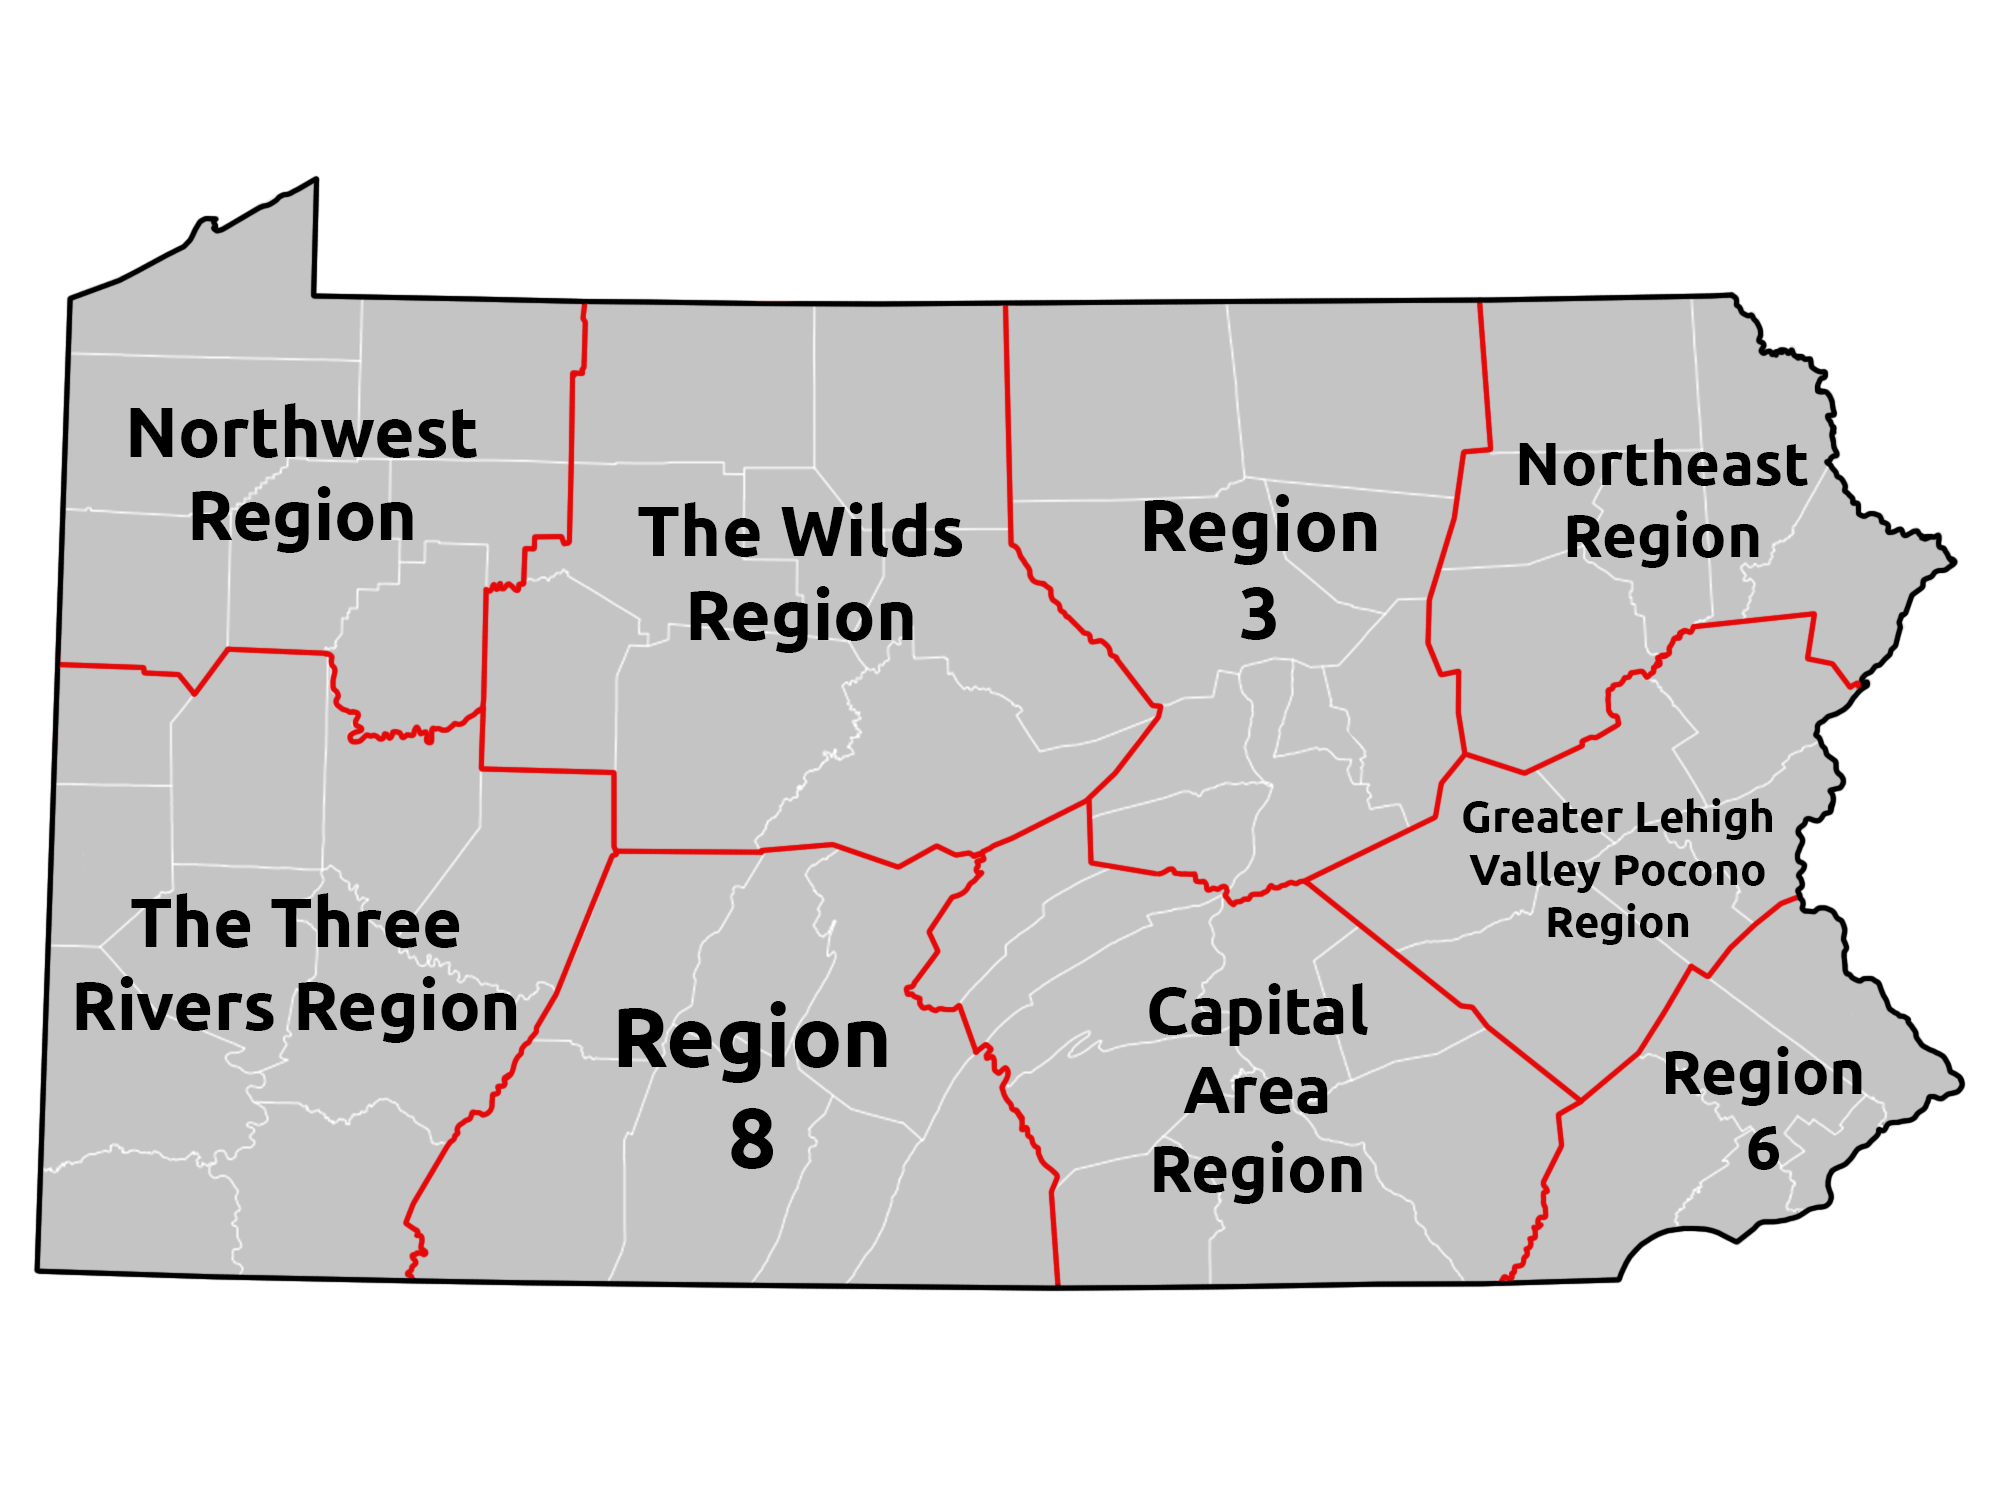 Pennsylvania State Map